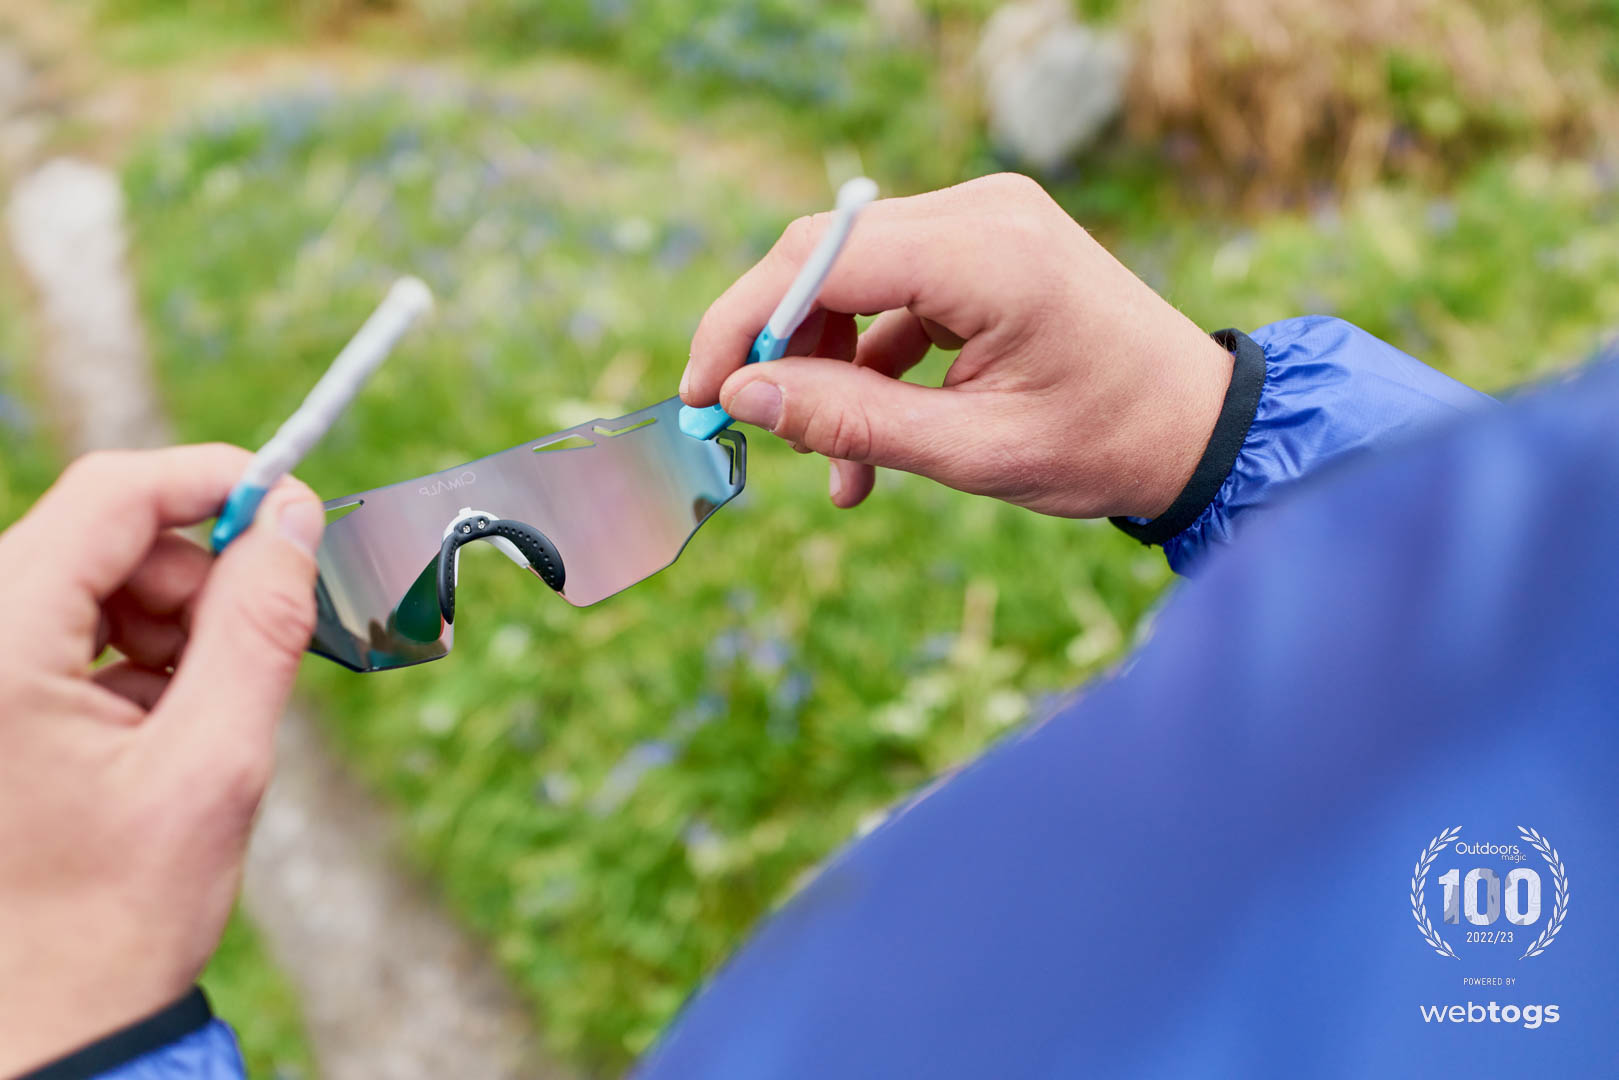 CimAlp Vision One Sport Sunglasses | Review